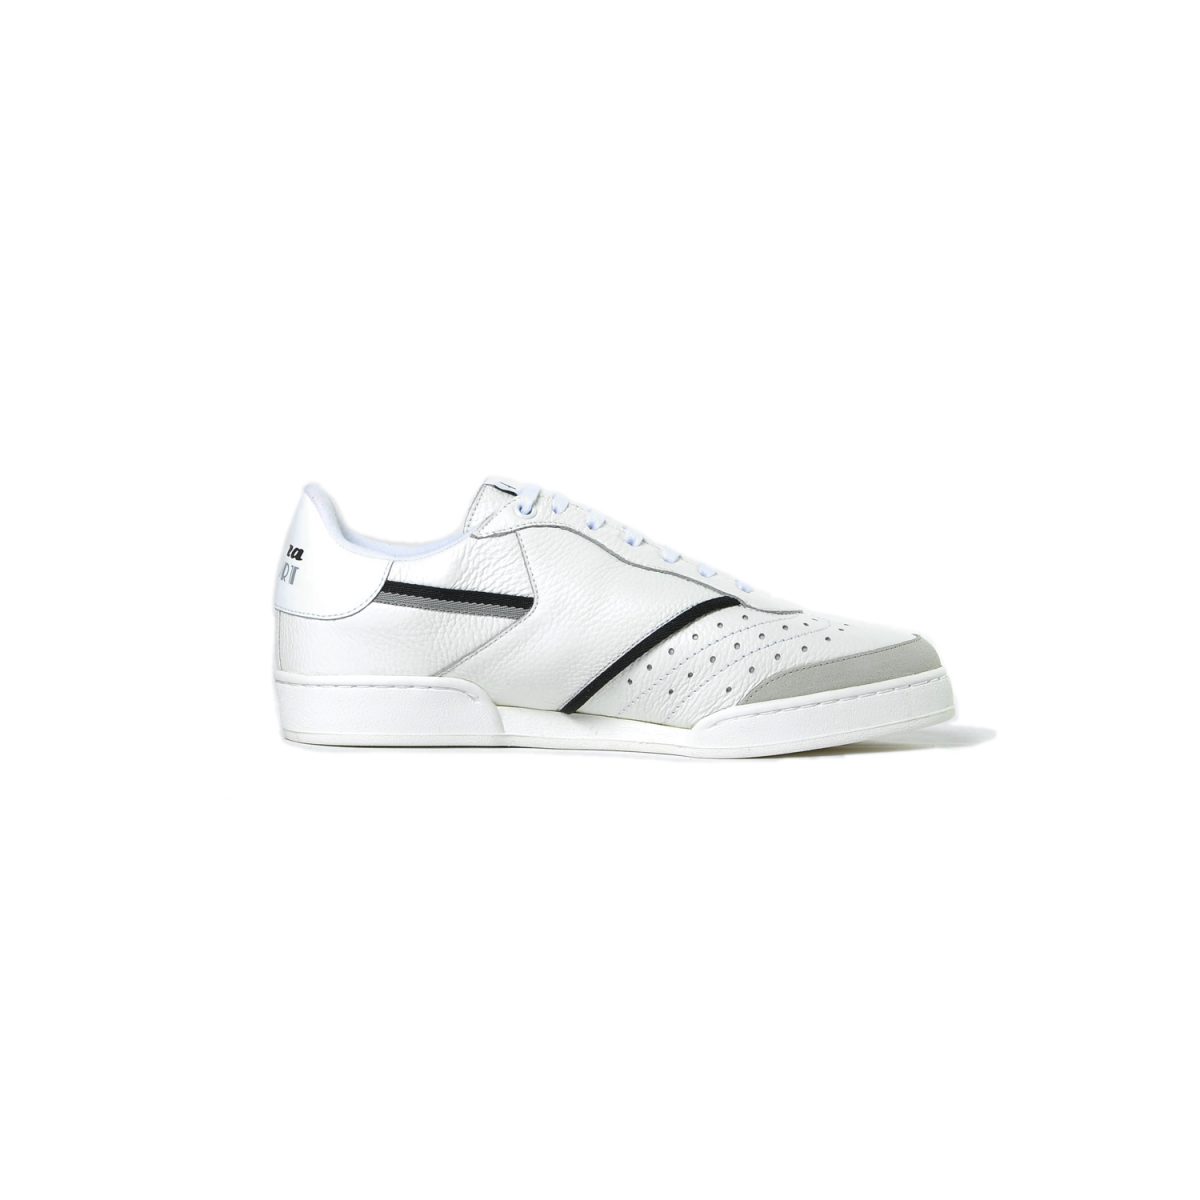 Tisza shoes - Sport - White-black